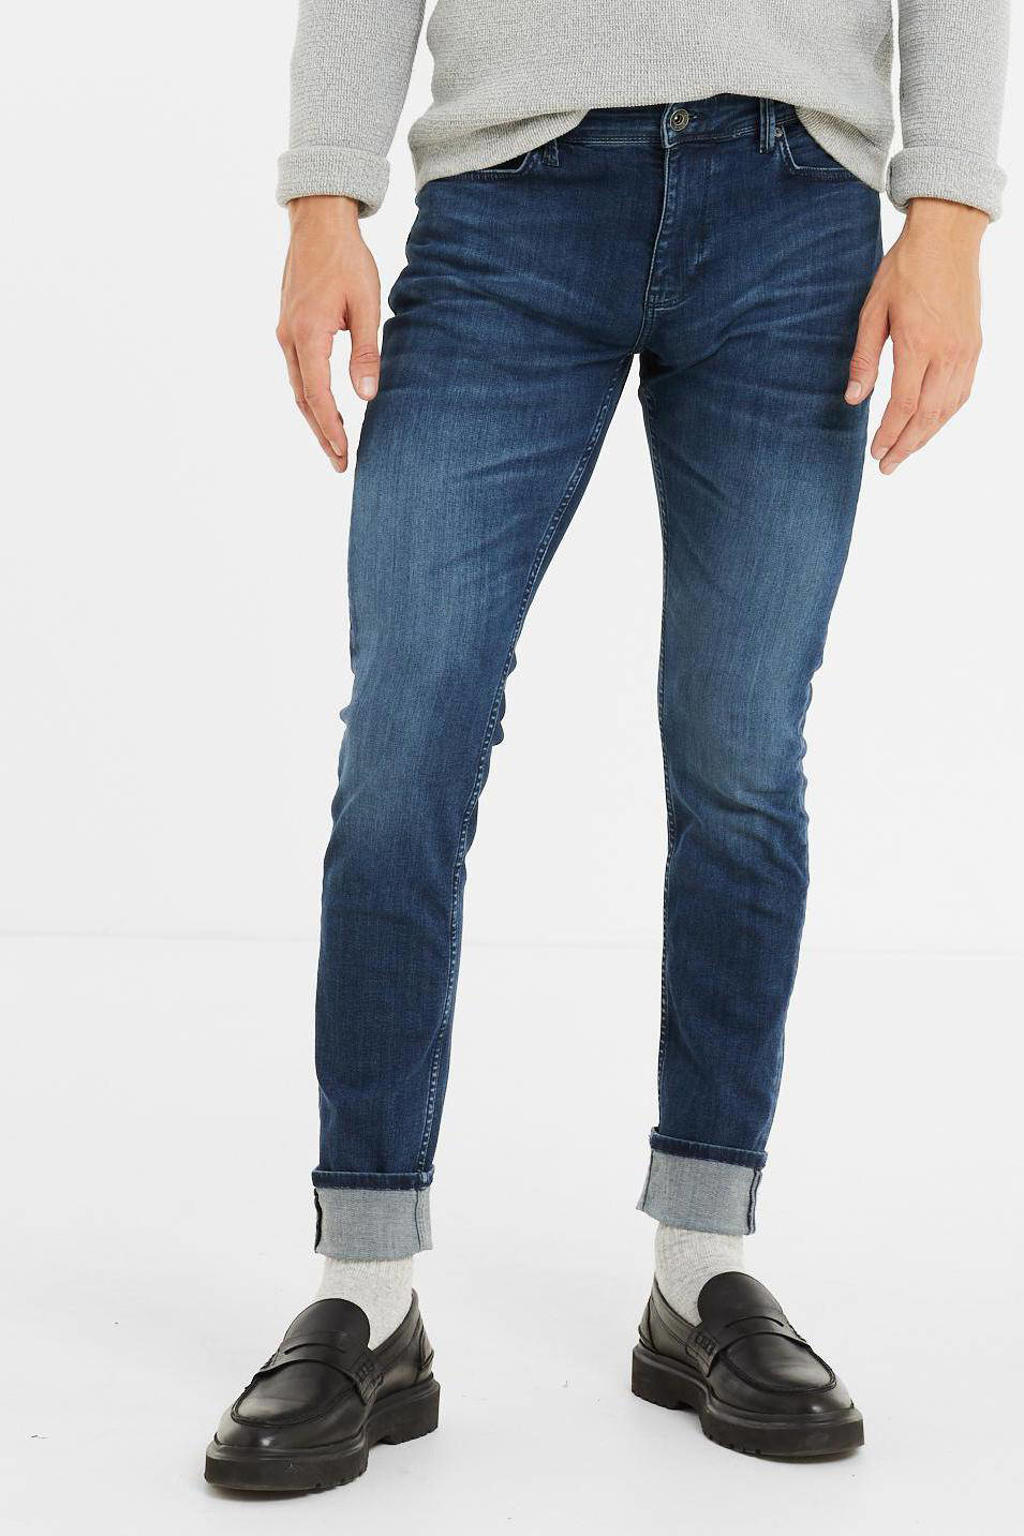 Purewhite skinny jeans The Jone W0875 denim mid blue